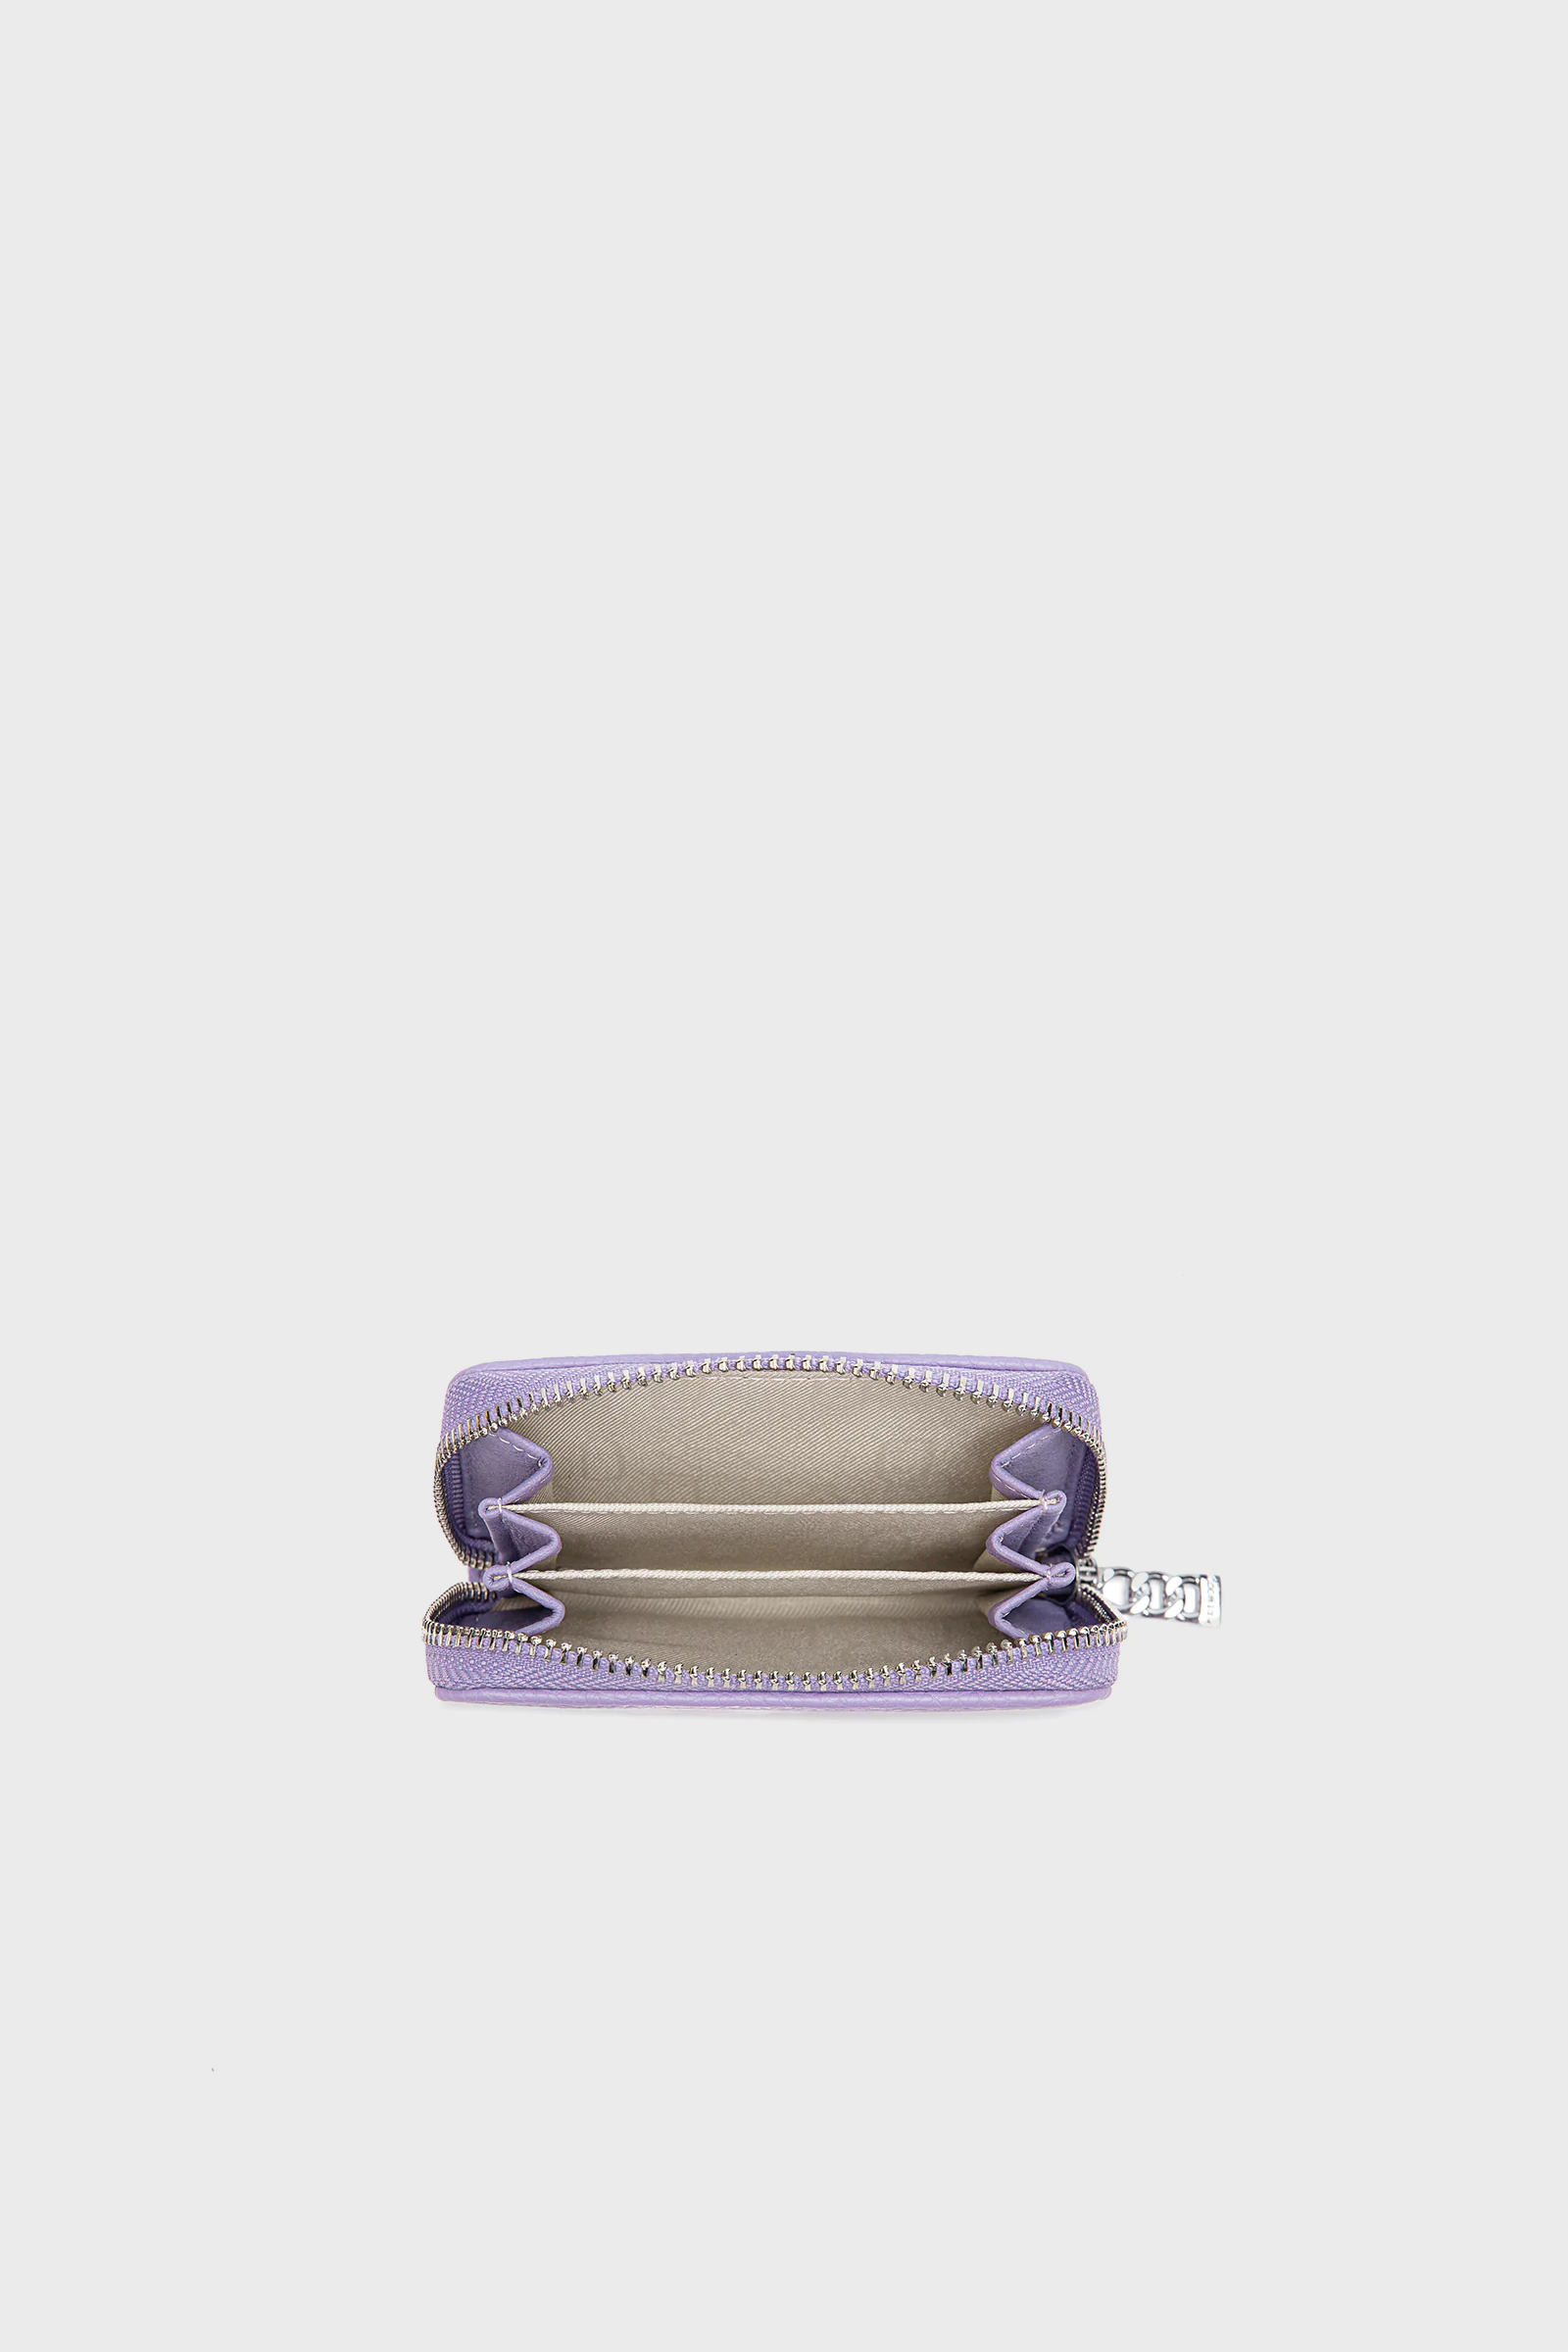 Kimi Card Wallet in Lavender Pebbled